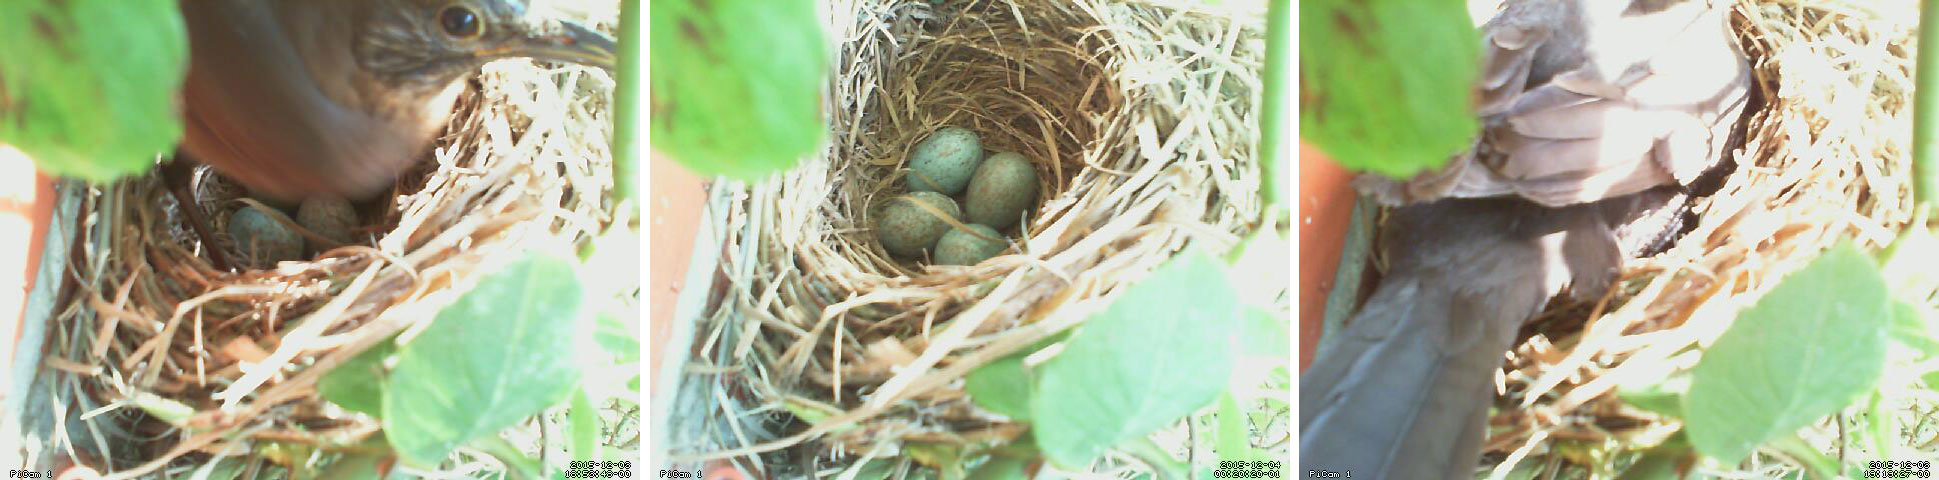 Blackbird nest & rPi cam feature image